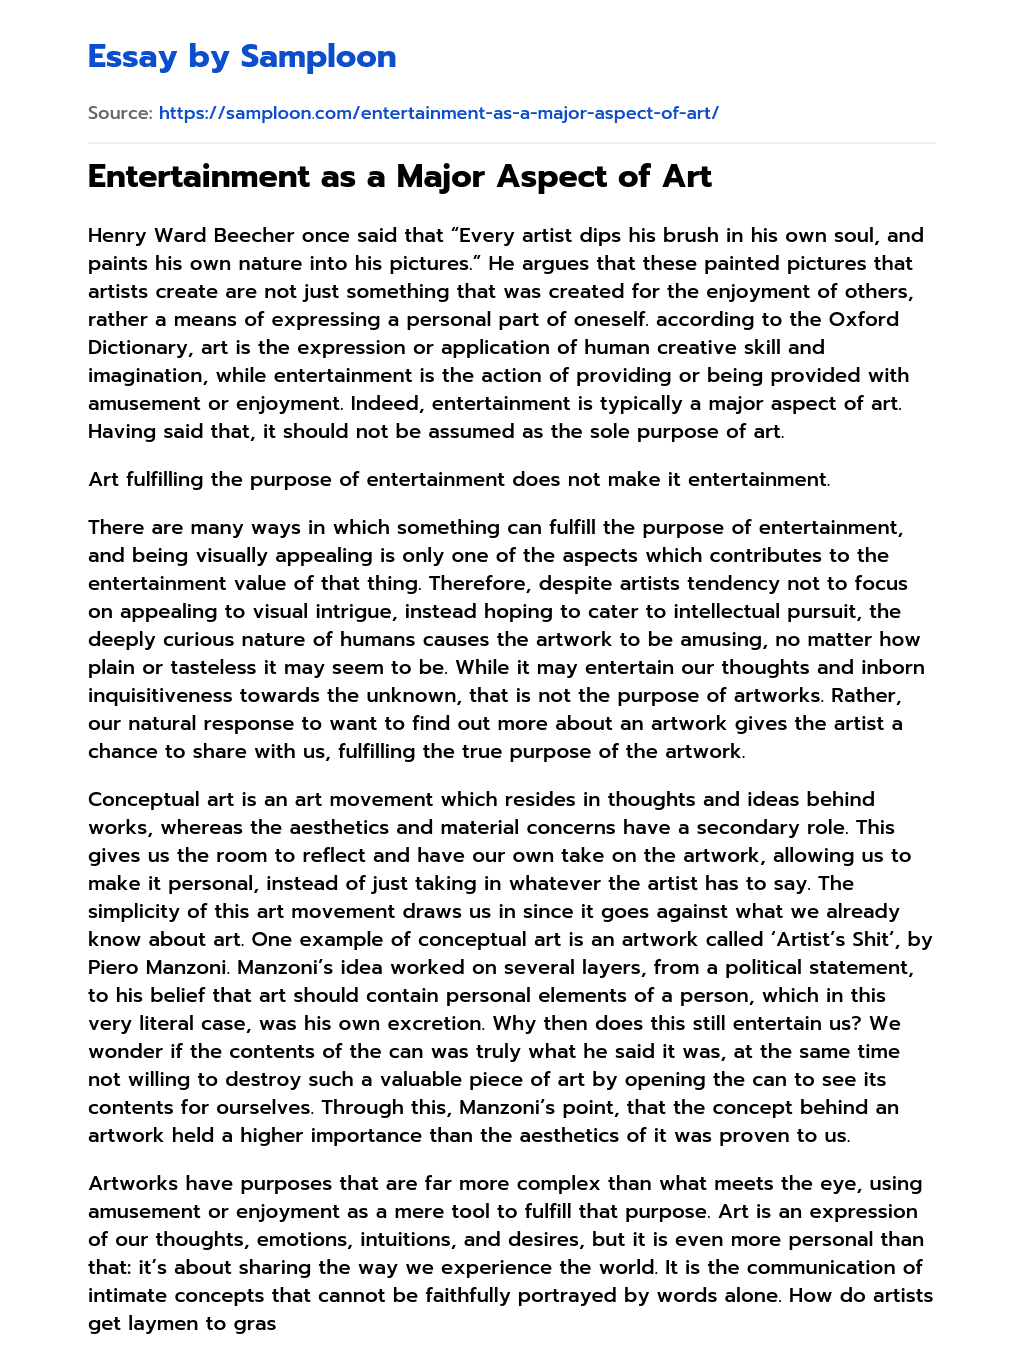 Entertainment as a Major Aspect of Art Analytical Essay essay